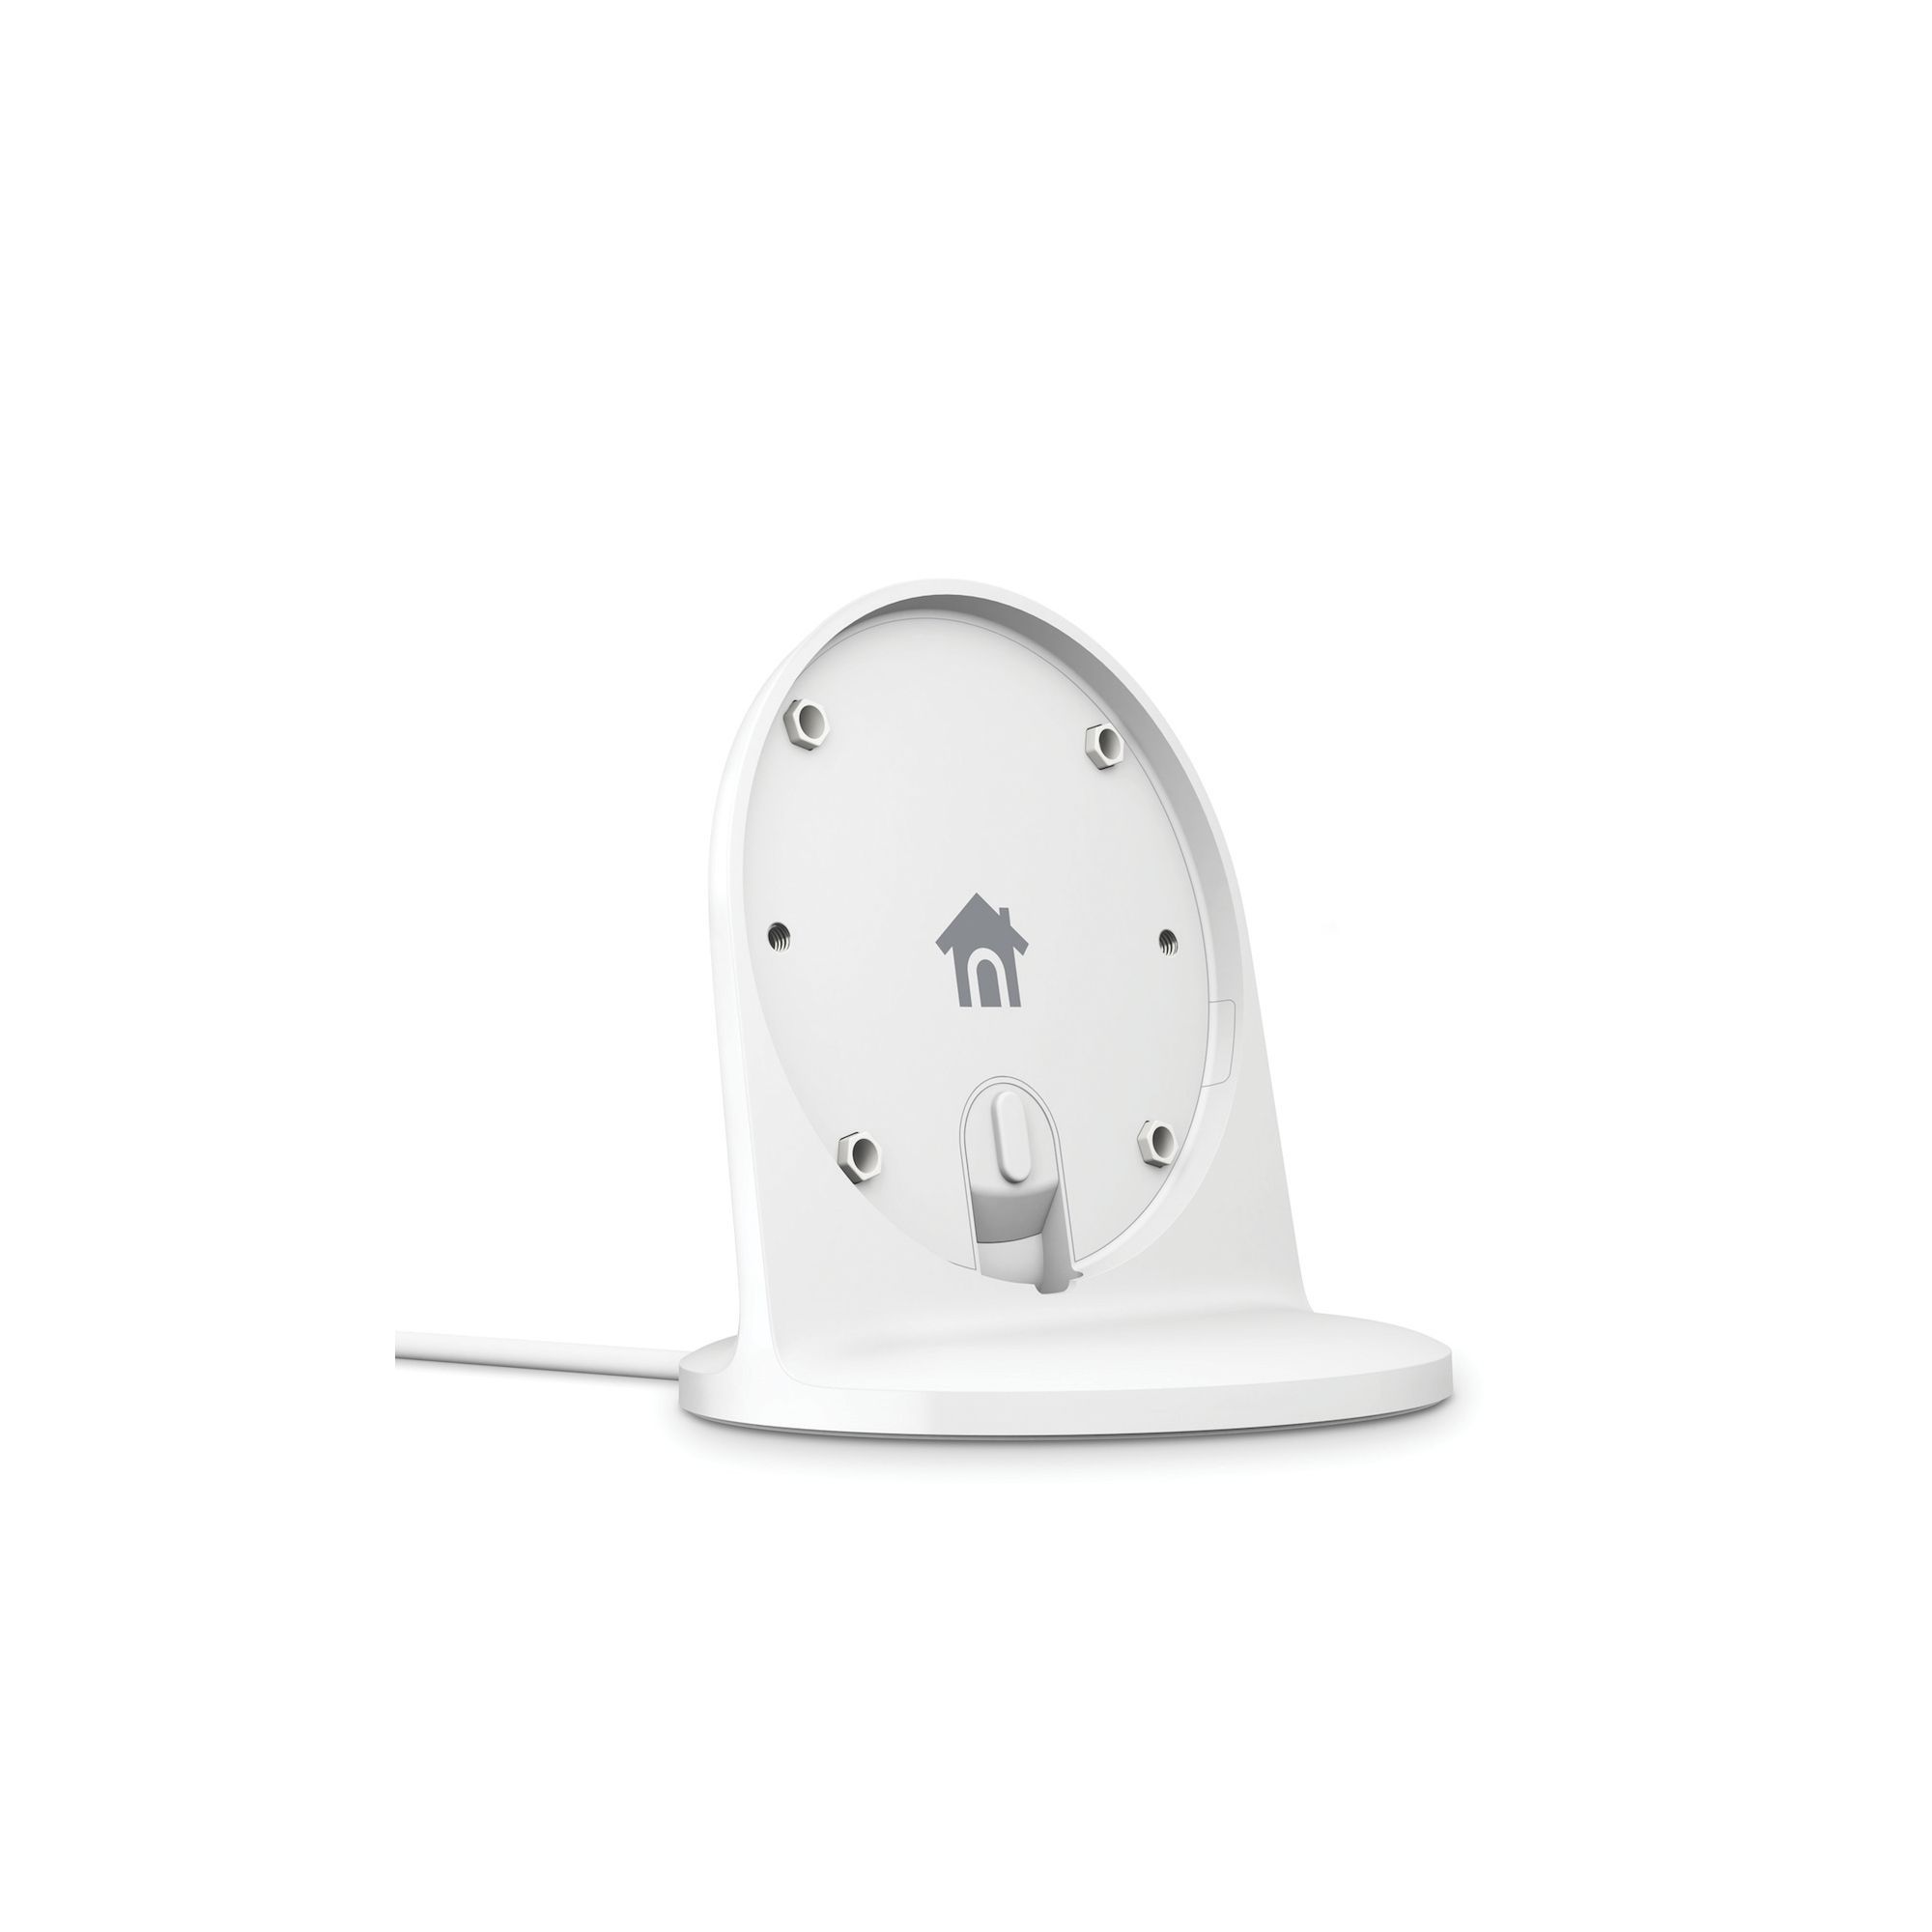 Google Nest White Thermostat stand